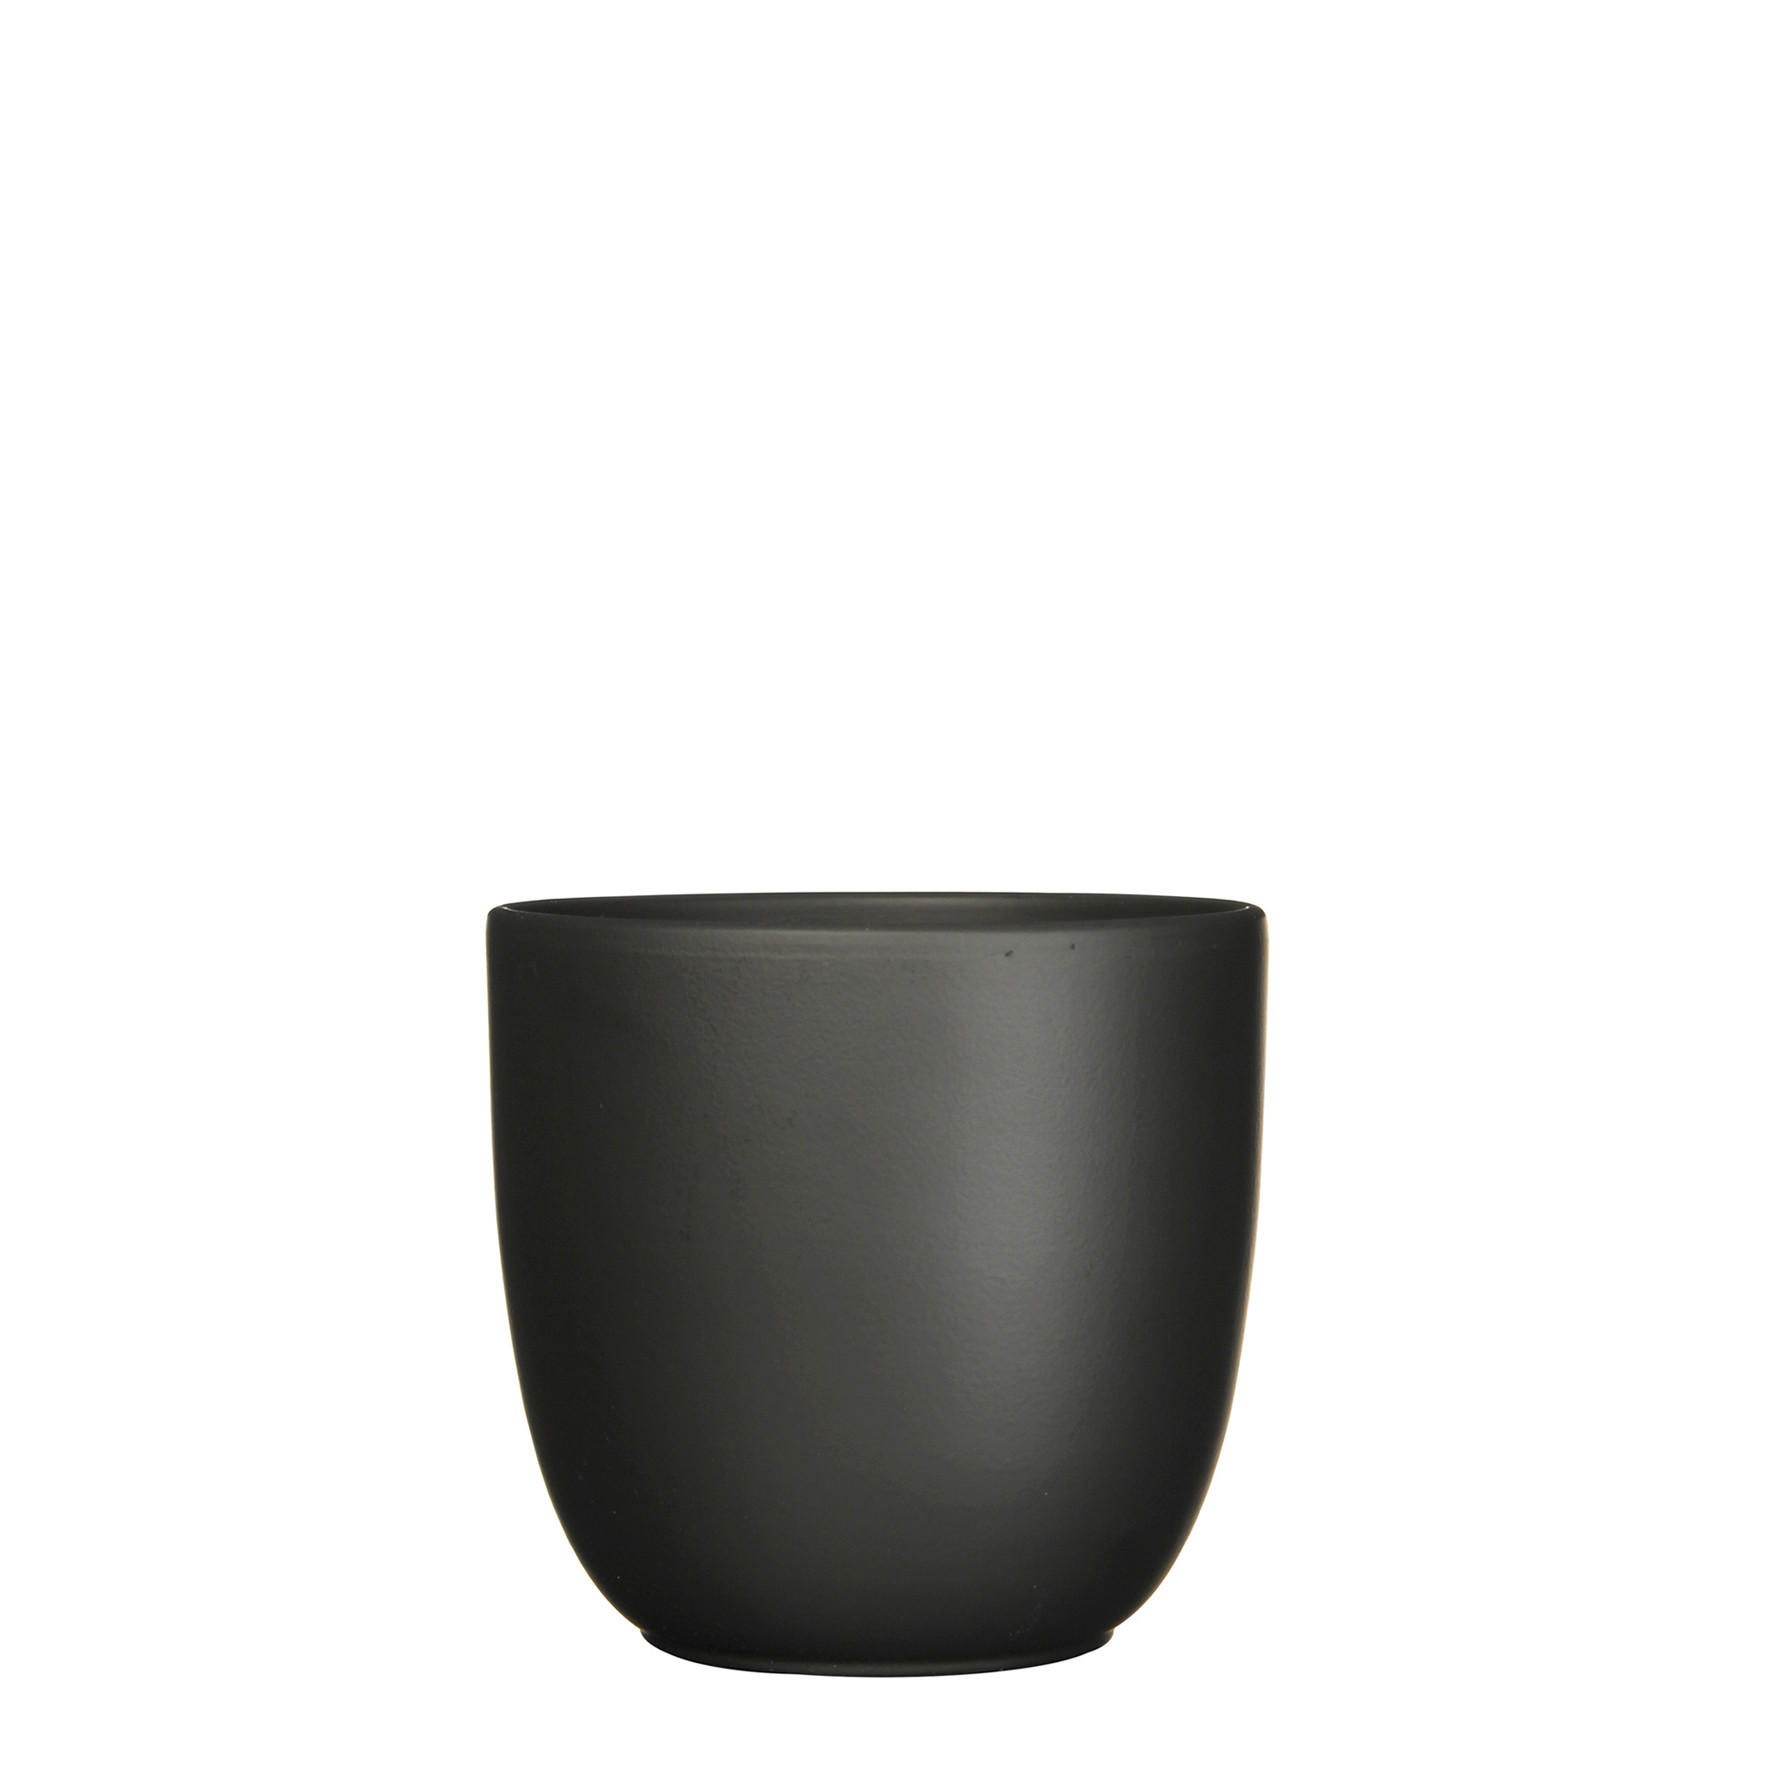 TEGLA ZA BILJKE  keramika  - crna, Basics, keramika (22.5/20cm)